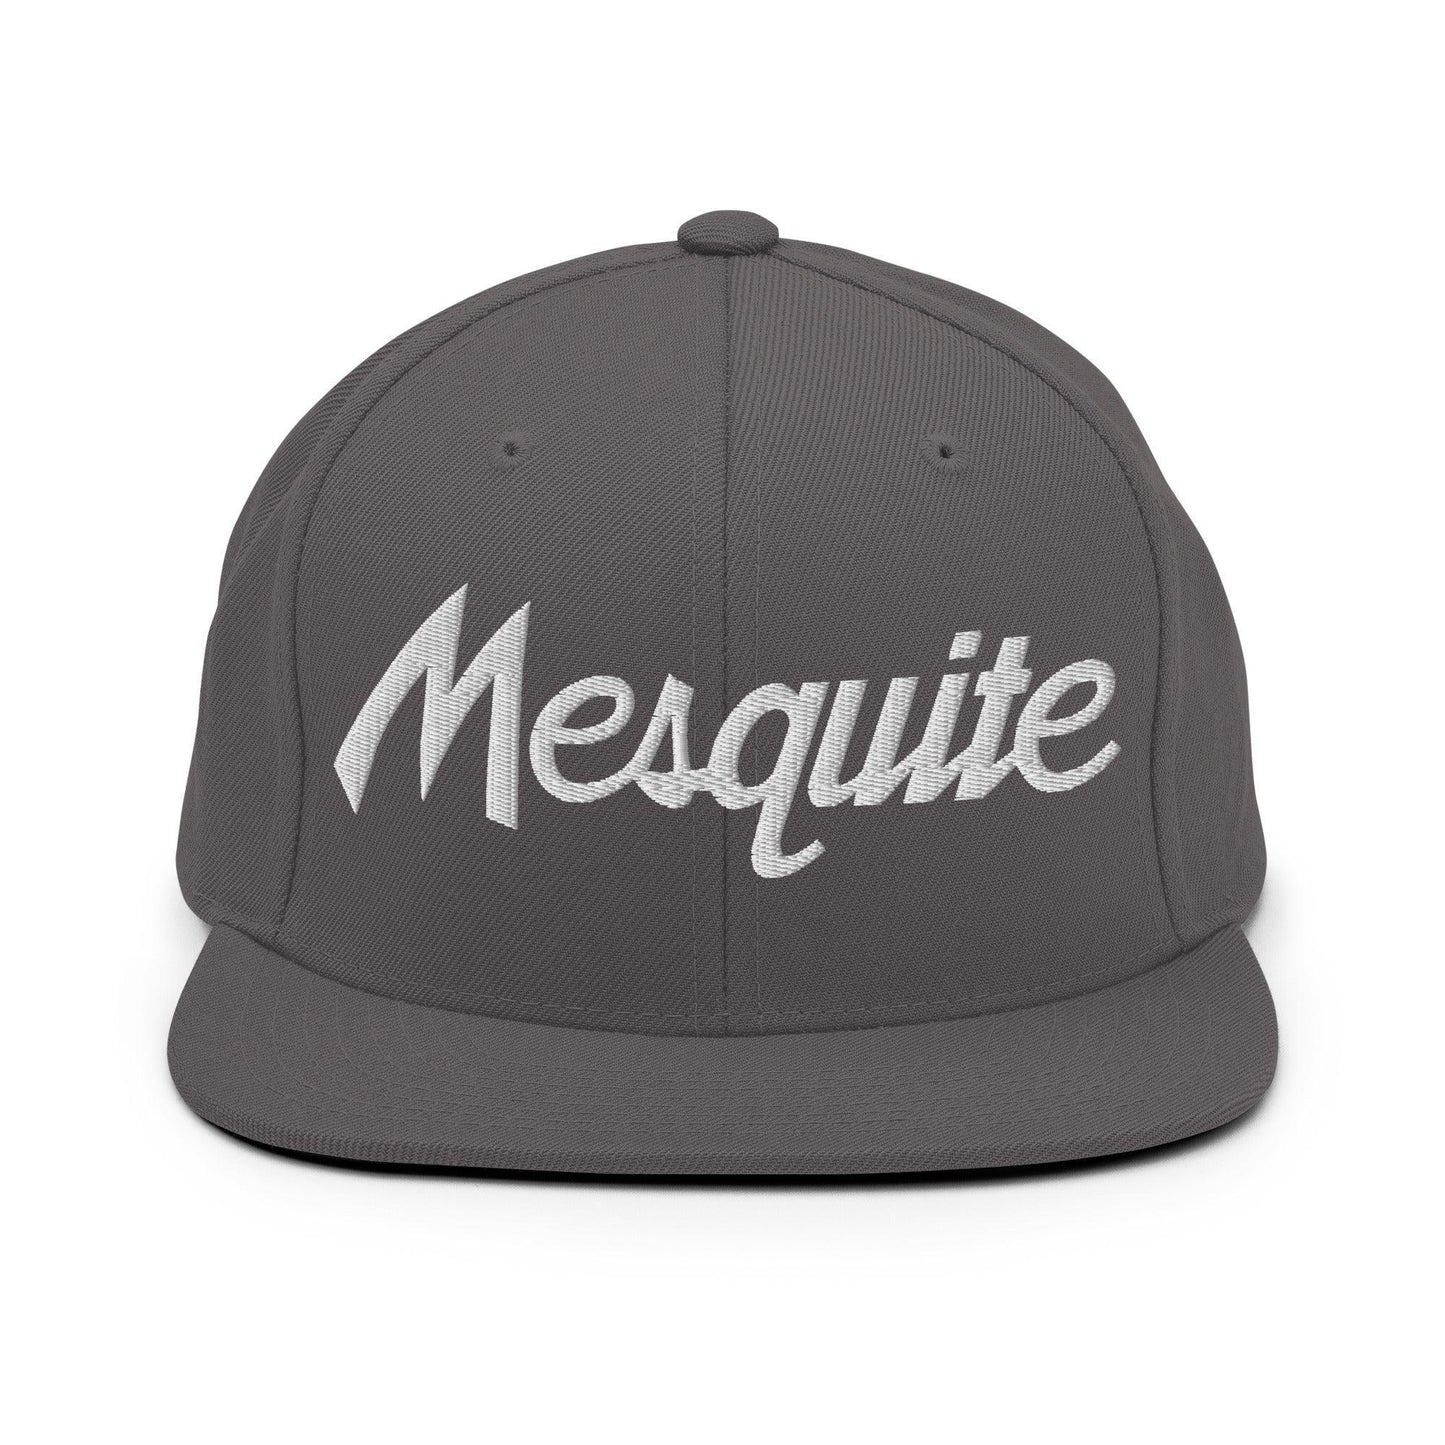 Mesquite Script Snapback Hat Dark Grey